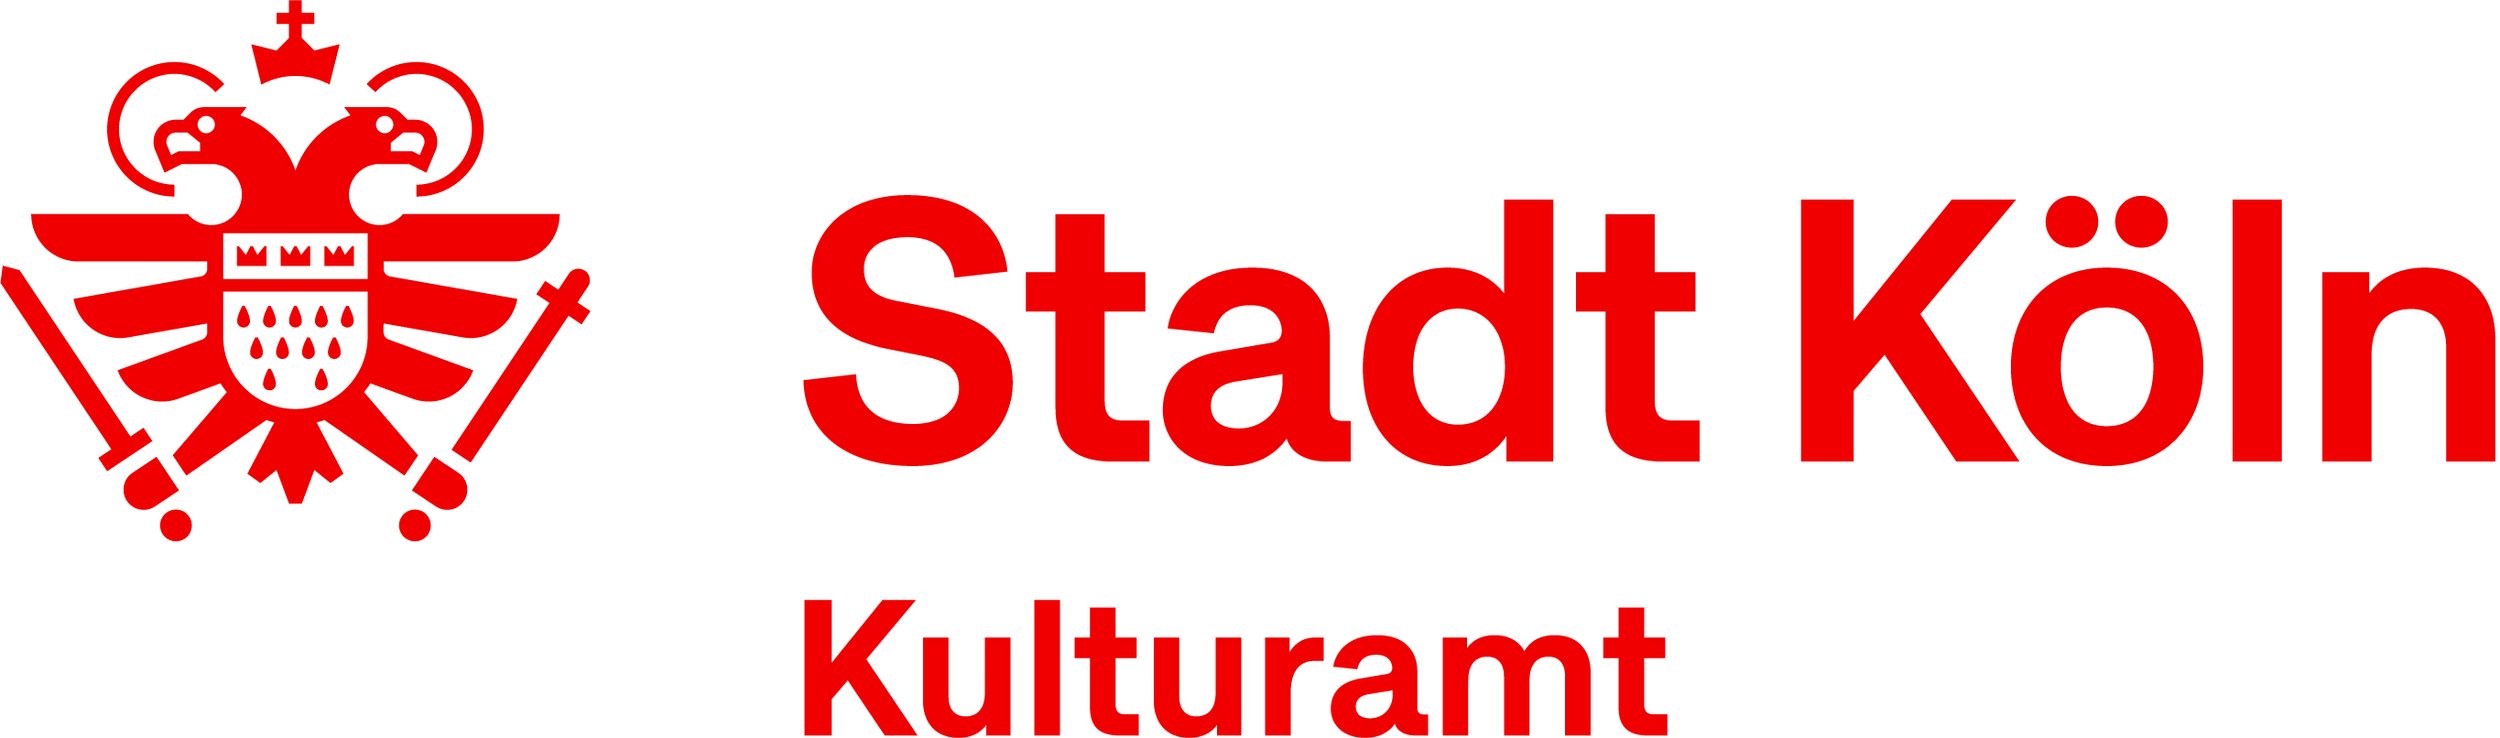 Stadt Köln - Kulturamt